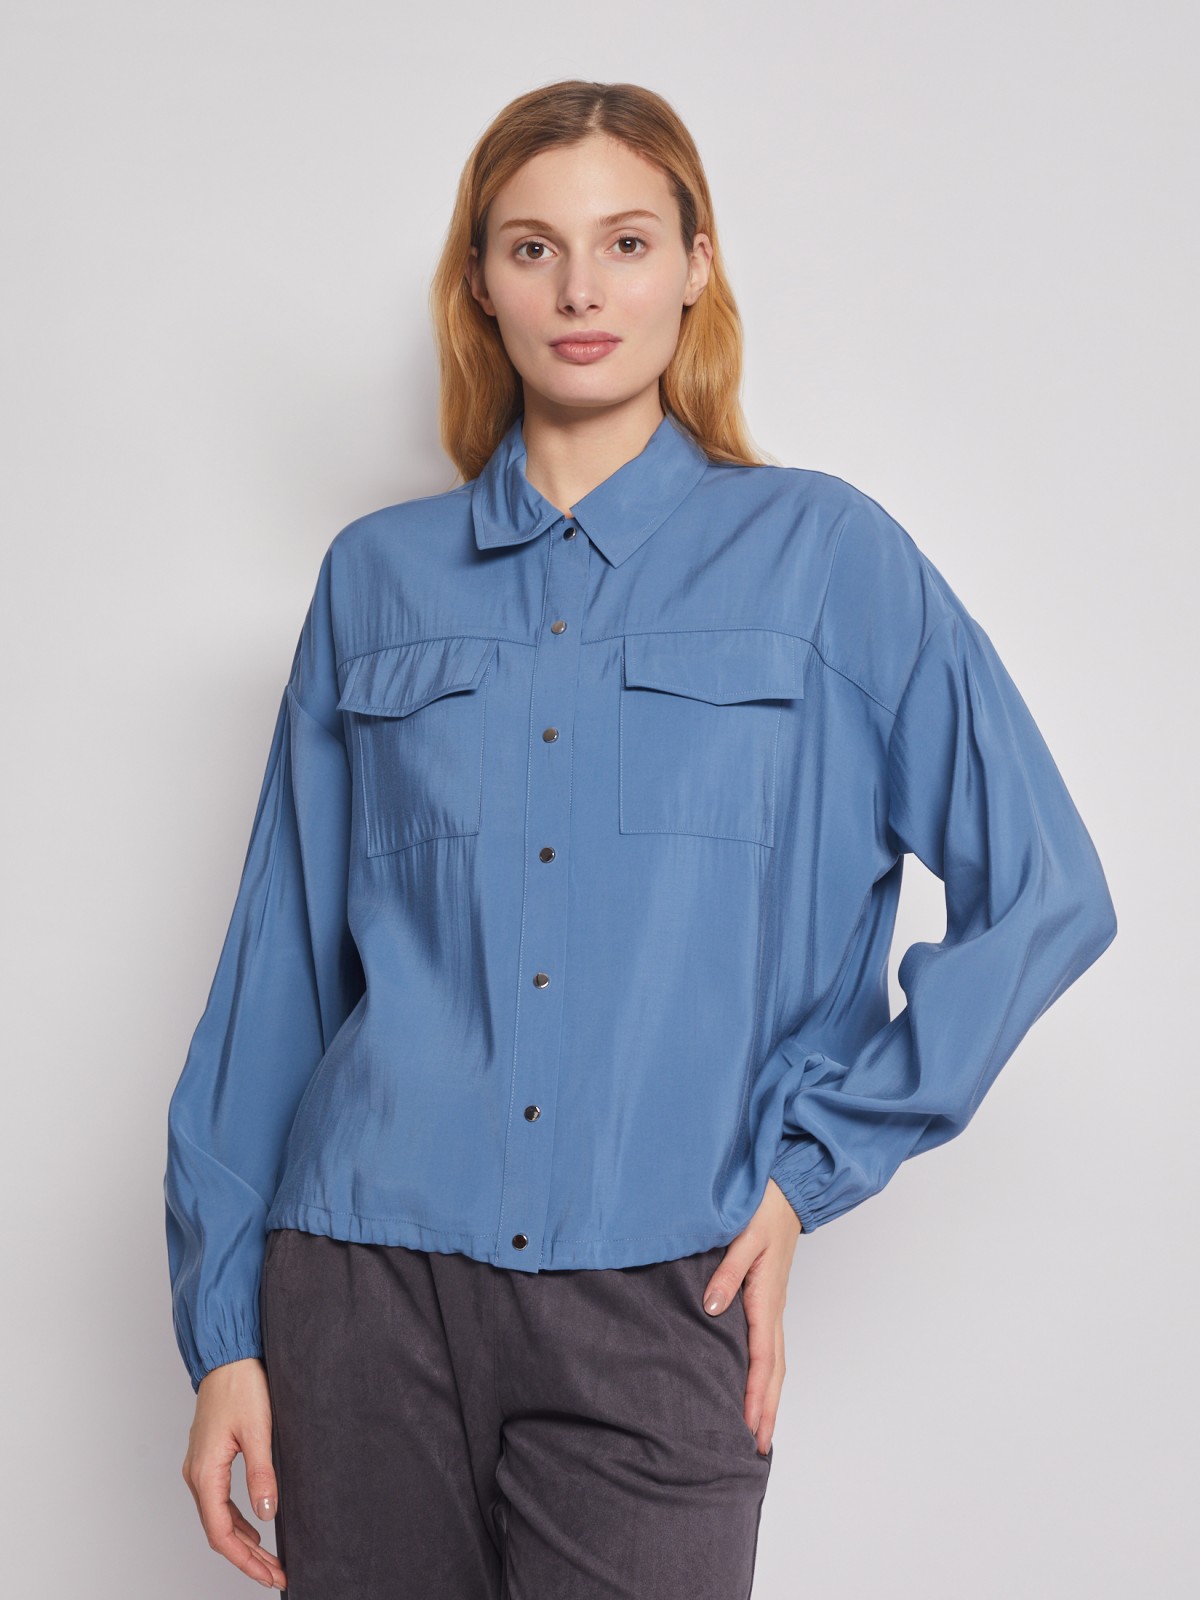 Блузка-рубашка в спортивном стиле zolla 02313117Y093, цвет голубой, размер XS - фото 4